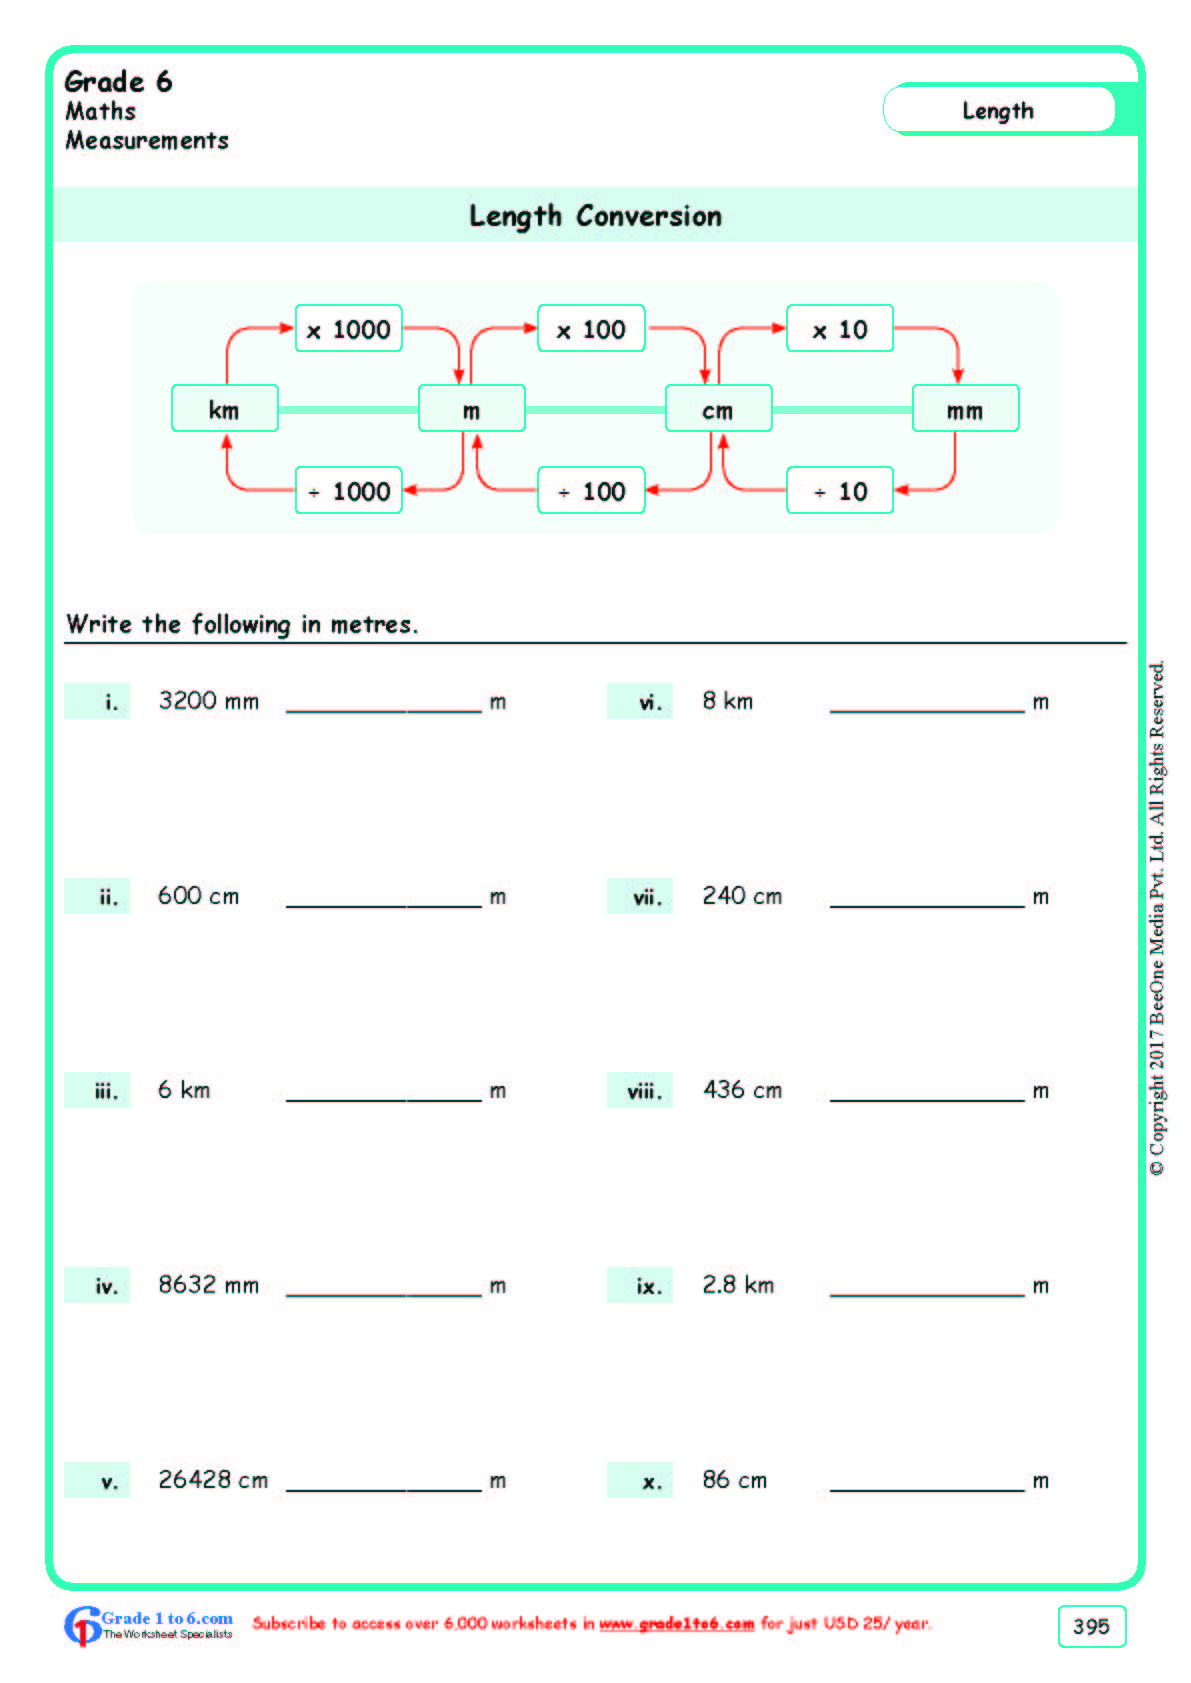 Length Conversion Worksheets|Grade 6|www.grade1to6.com